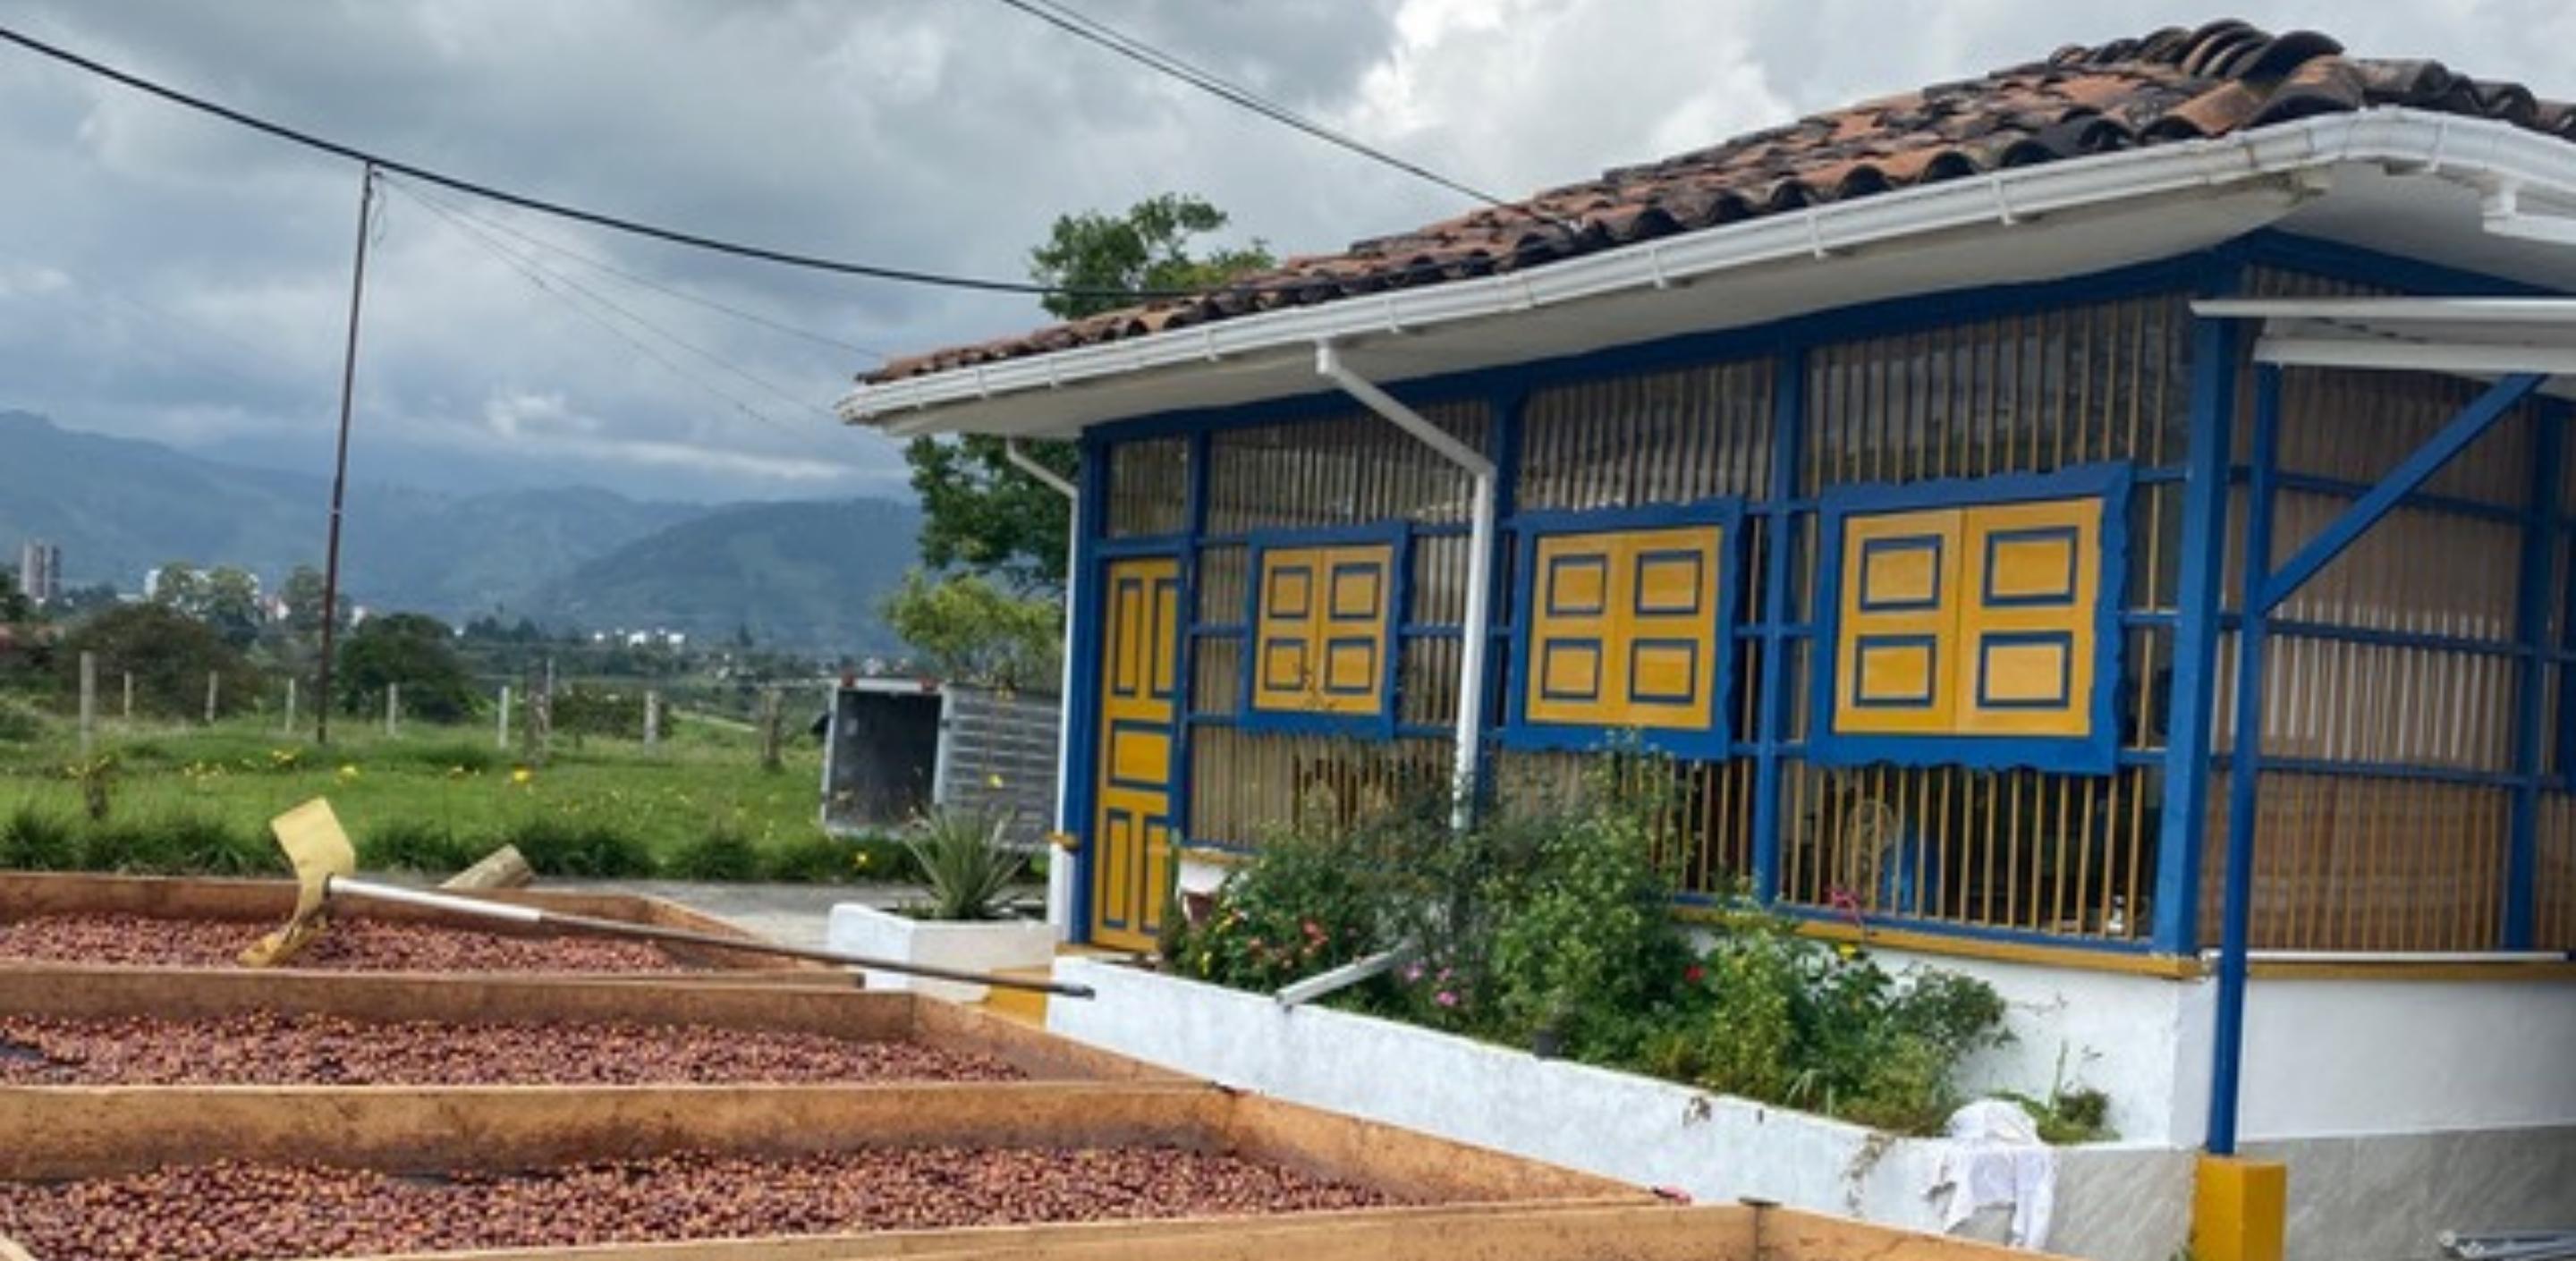 Casa campesina colombiana / Rural Colombian house